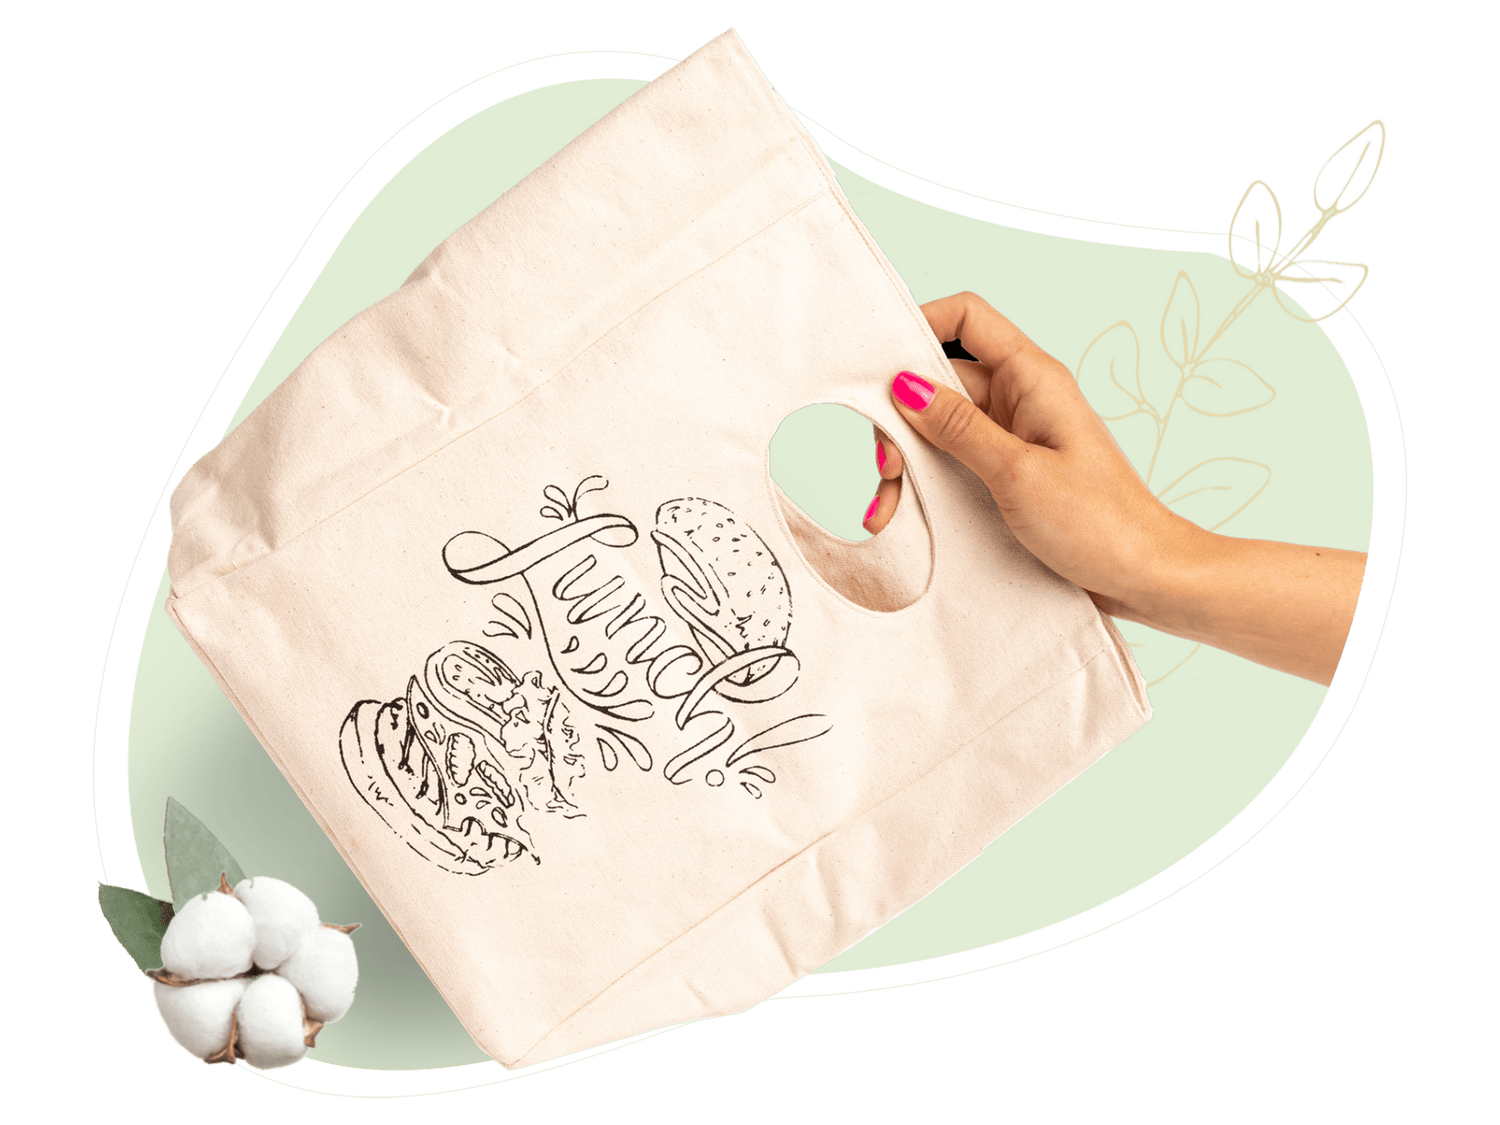  Organic Cotton Canvas Lunch Bag - Eco Friendly & Machine  Washable, Perfect for Men, Women & Kids